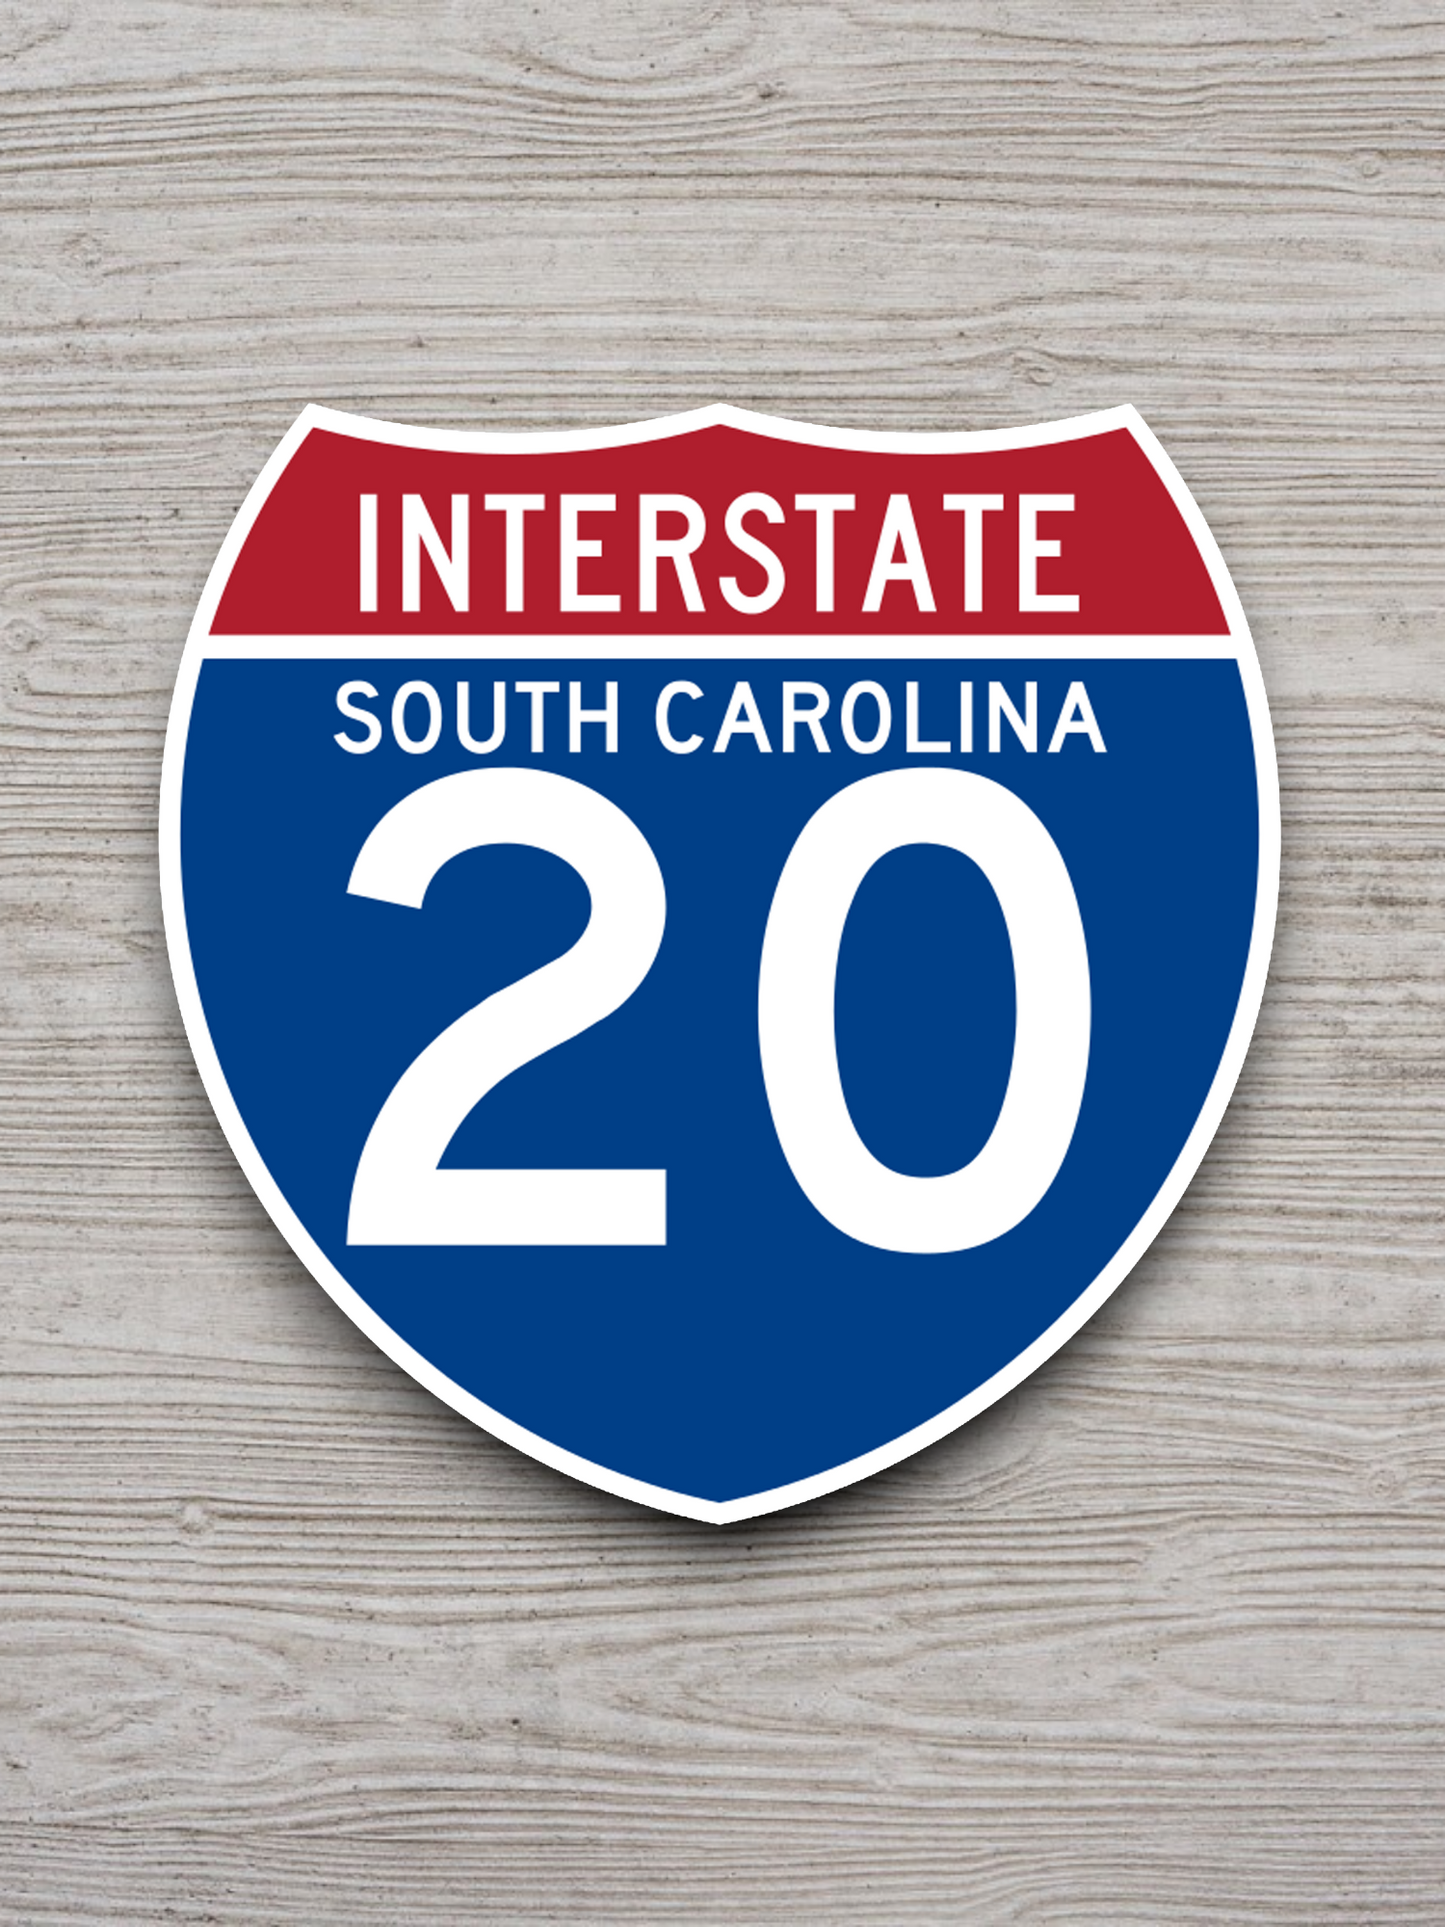 Interstate I-20 South Carolina - Road Sign Sticker